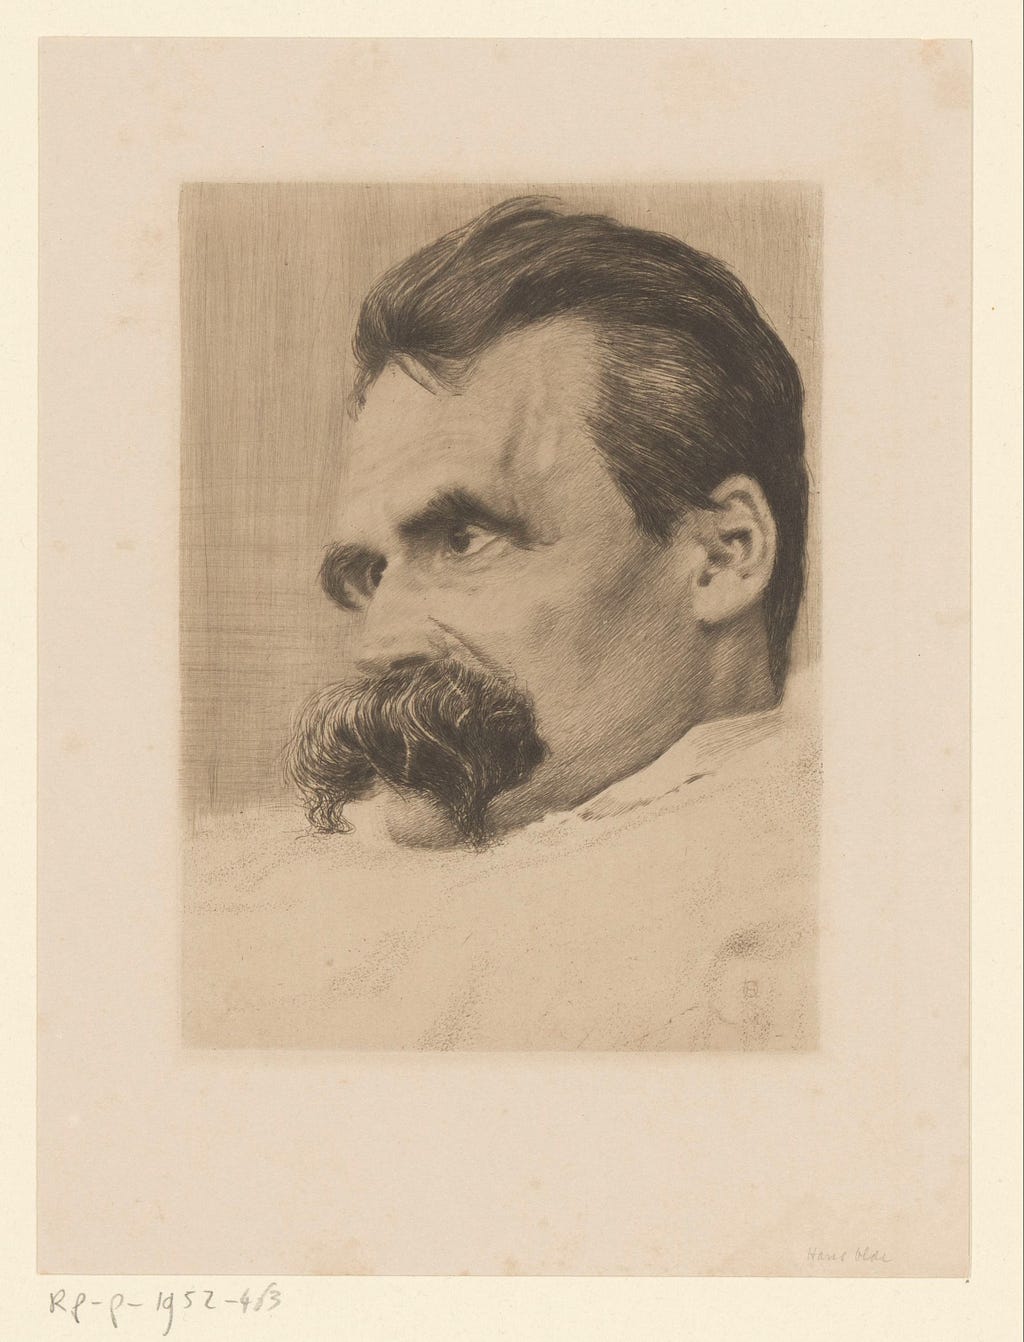 Etching of Friedrich Nietzsche, leading German philosopher of the modern era.